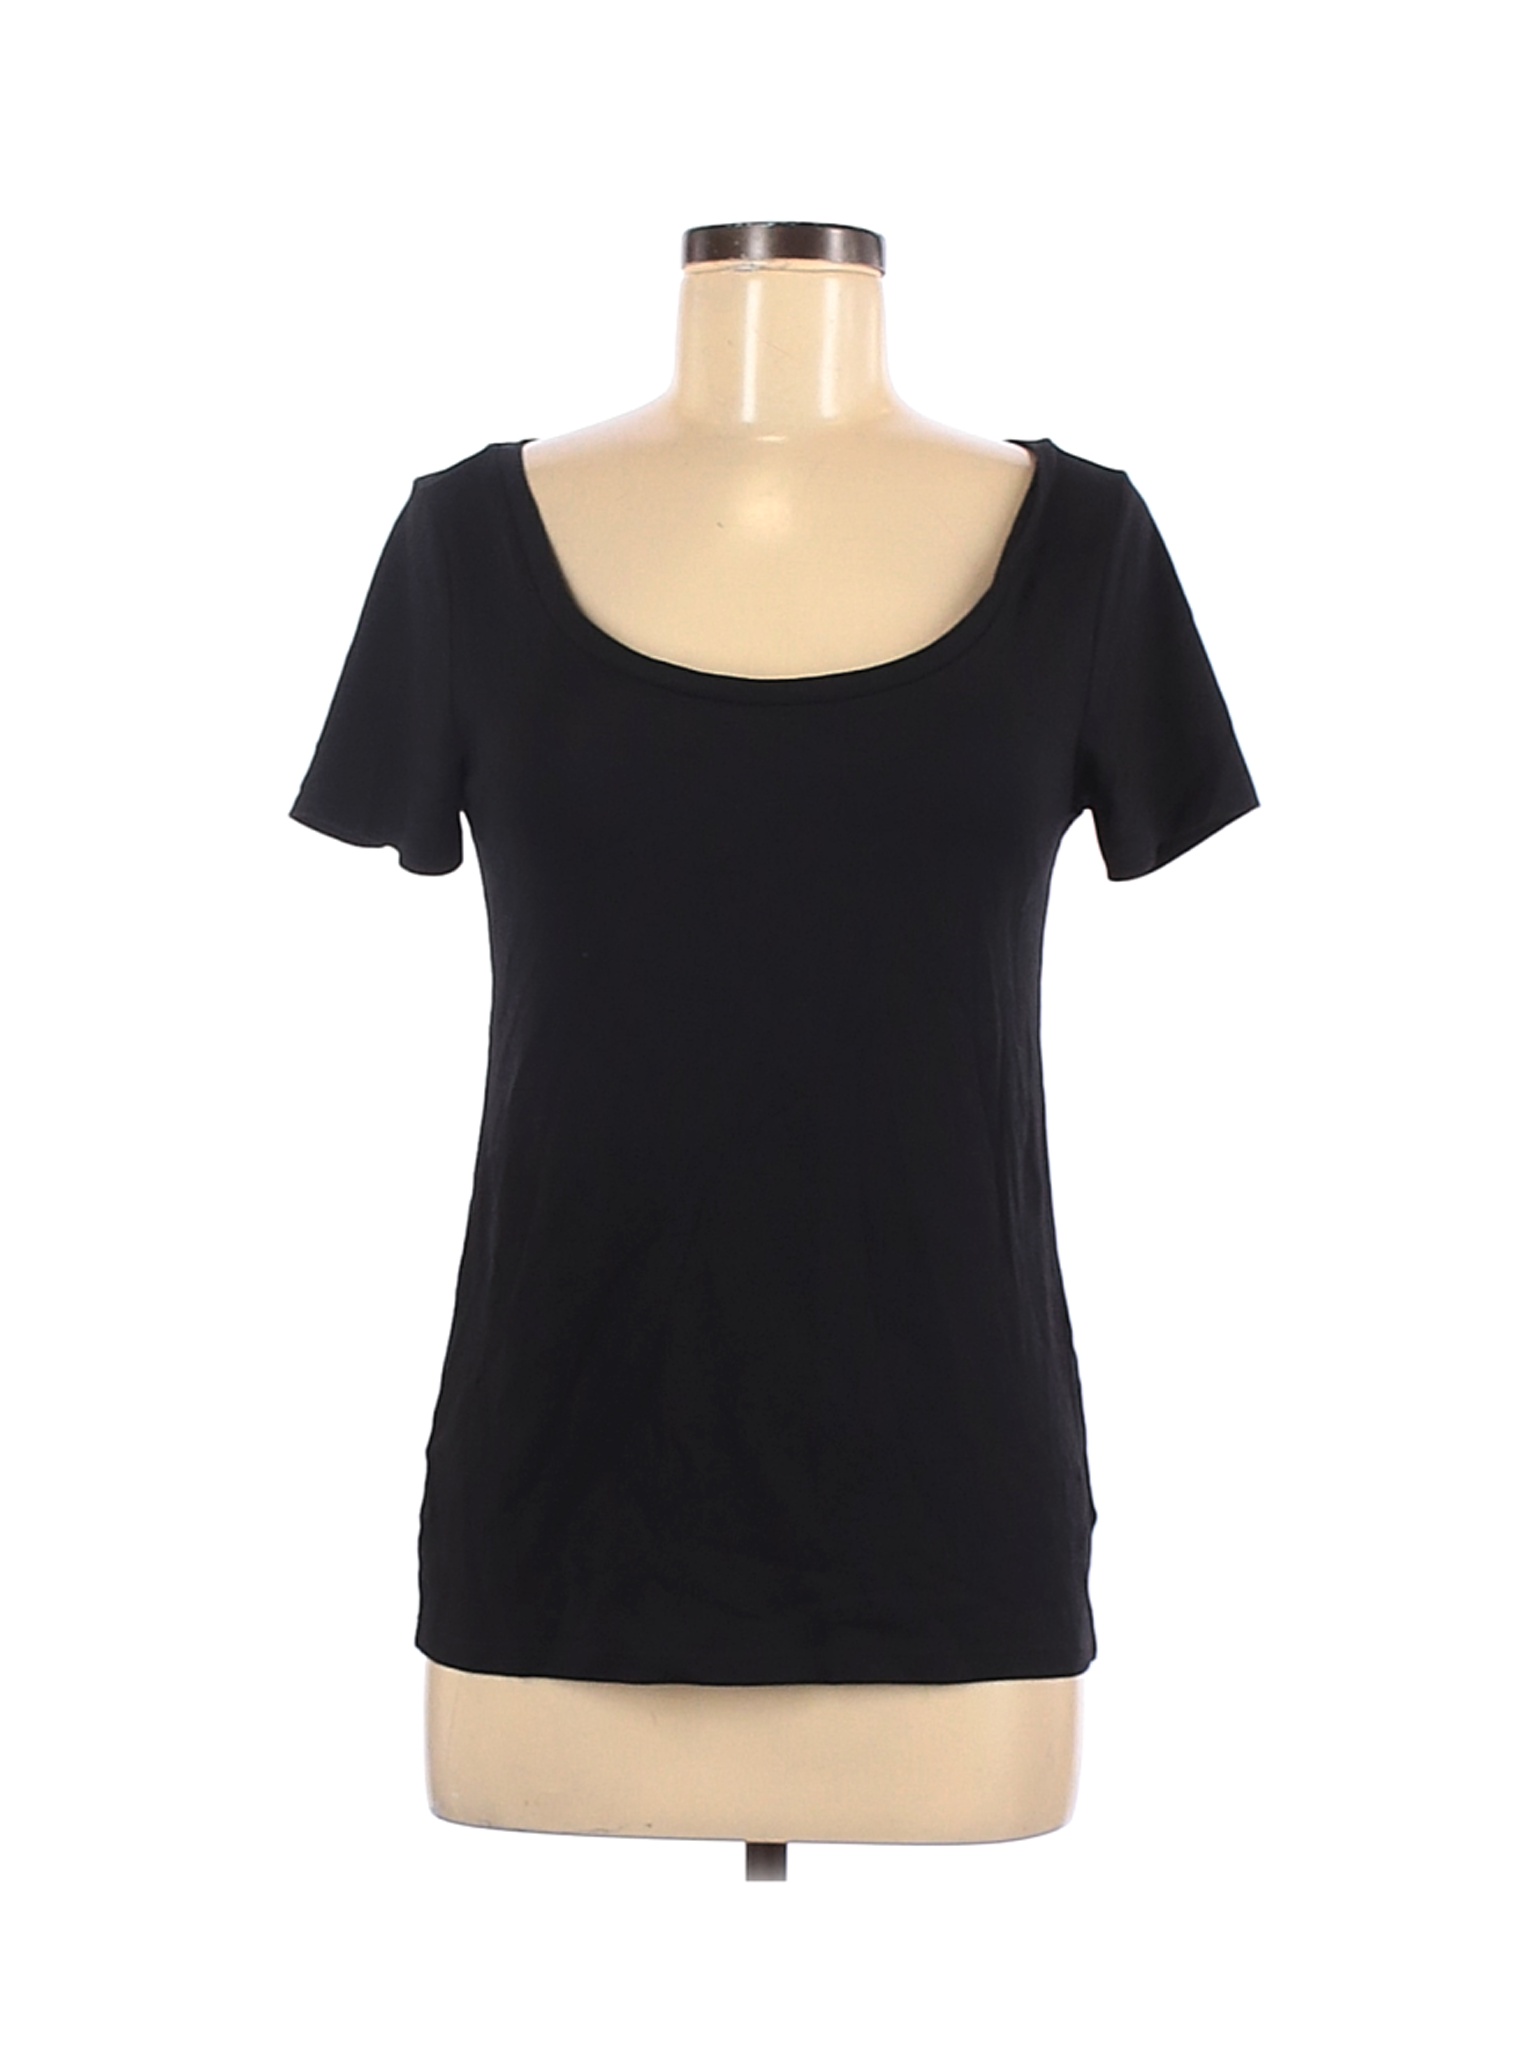 Old Navy Women Black Short Sleeve T-Shirt M | eBay